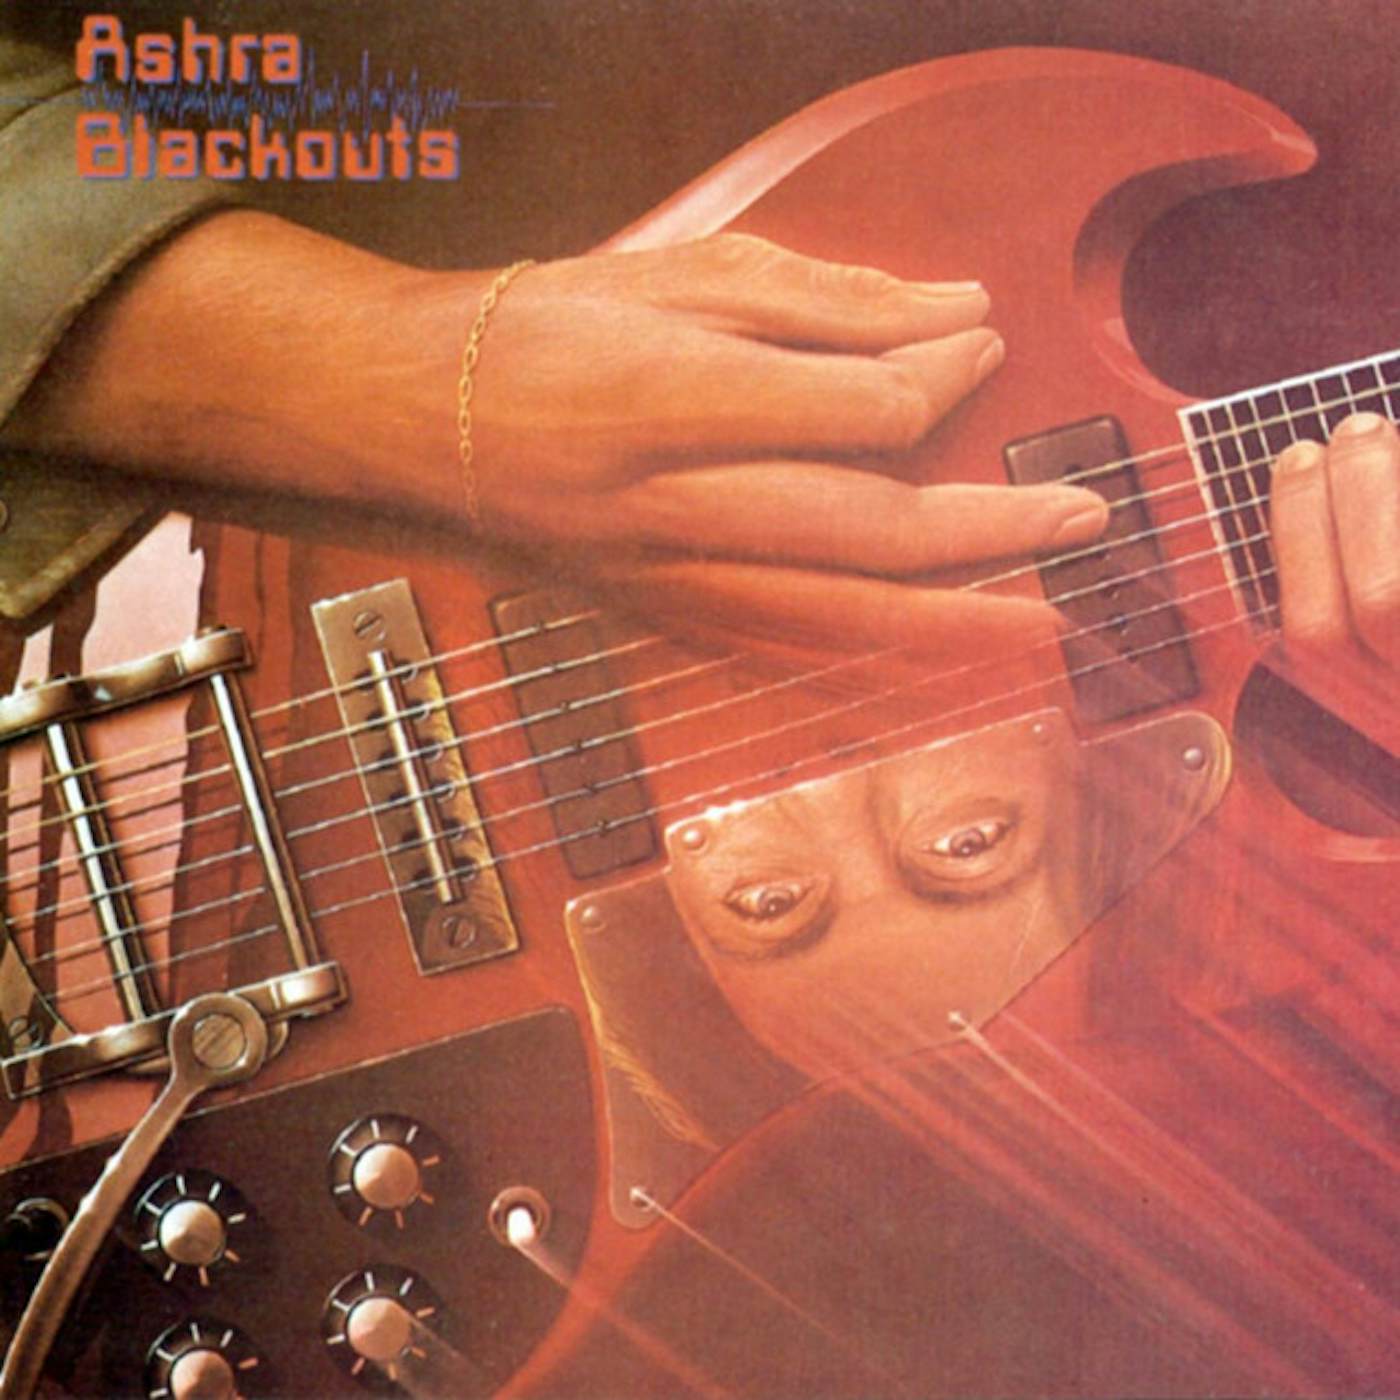 Ashra Blackouts Vinyl Record